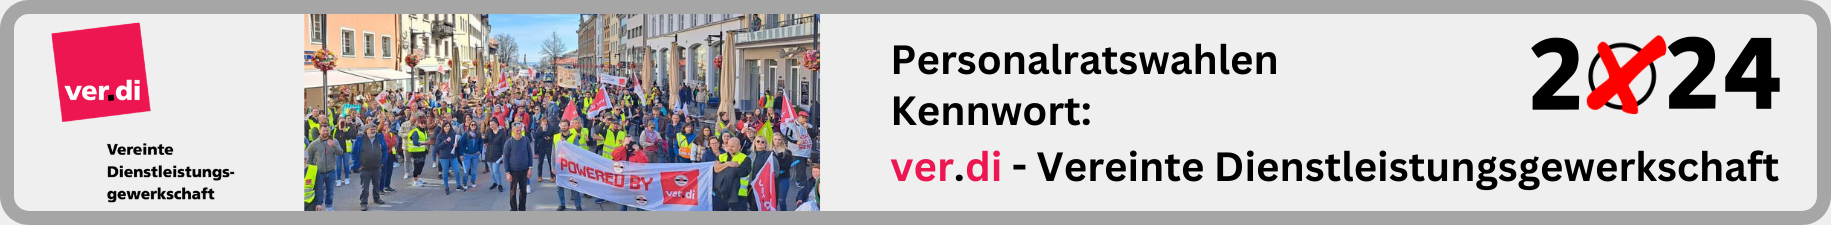 www.wir-koennen-personalrat.de